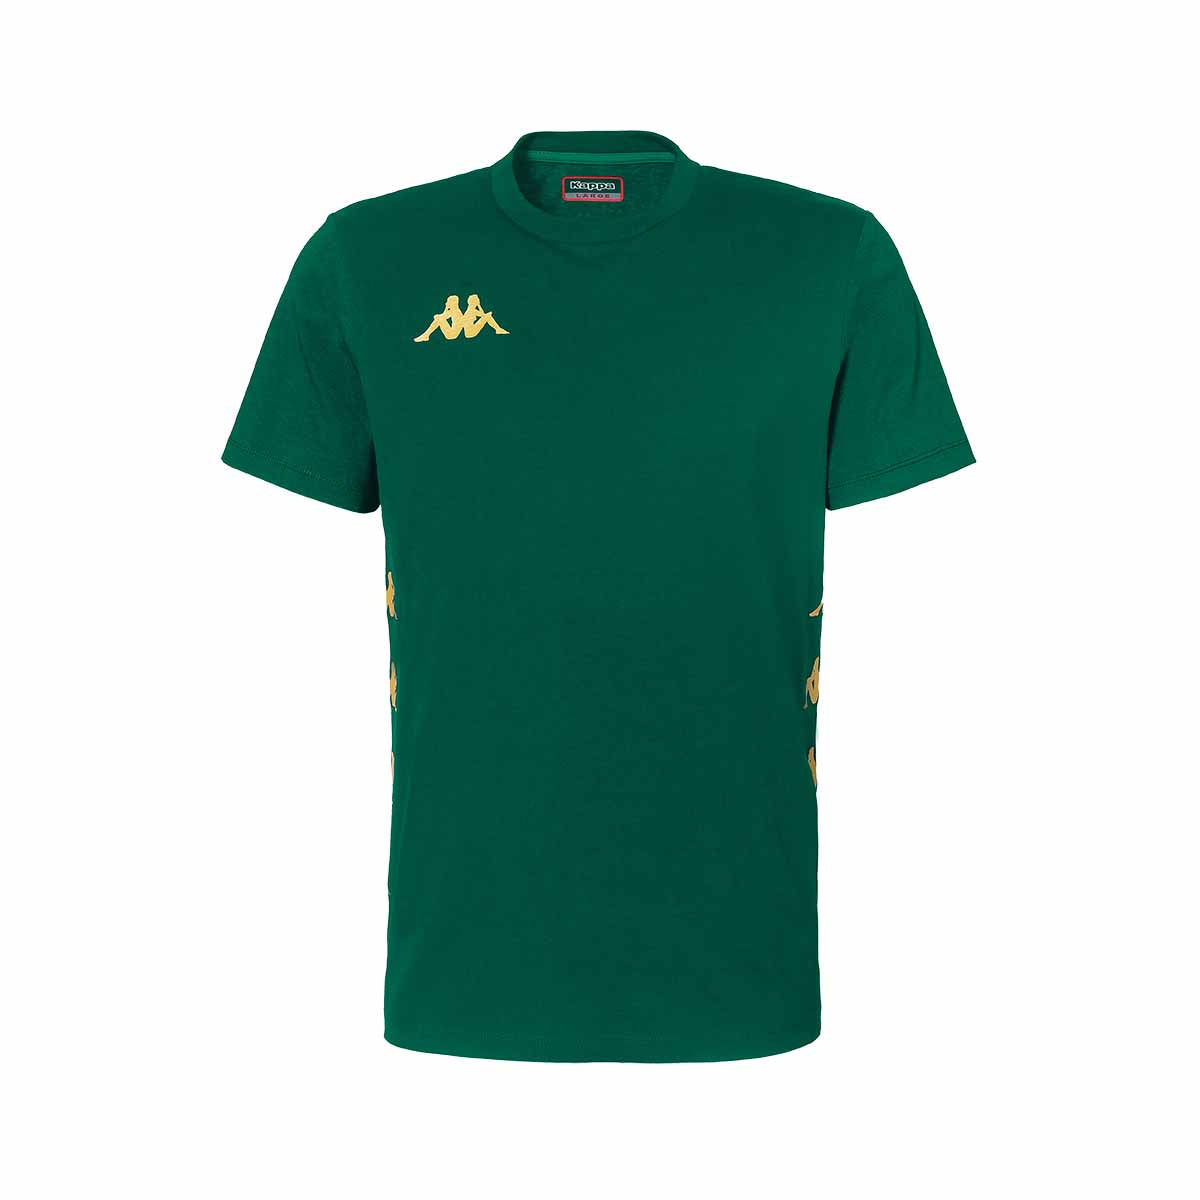 Camiseta Kappa Giovo - verde - 